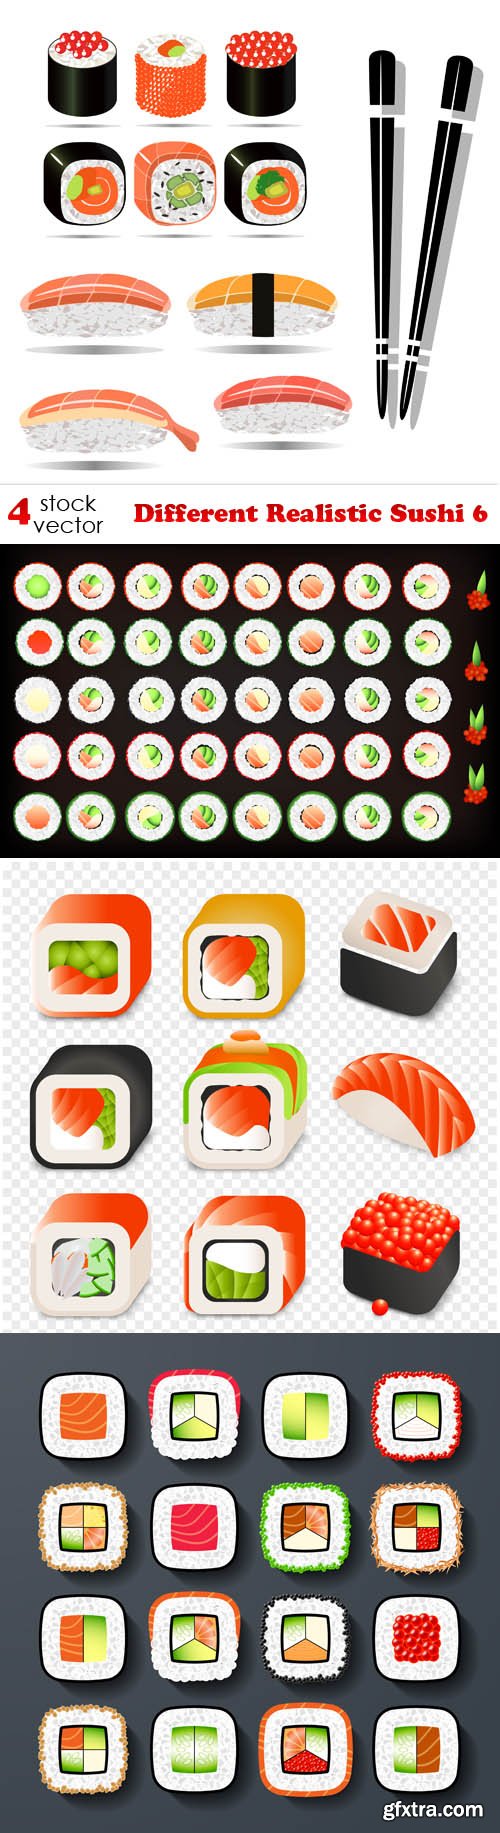 Vectors - Different Realistic Sushi 6